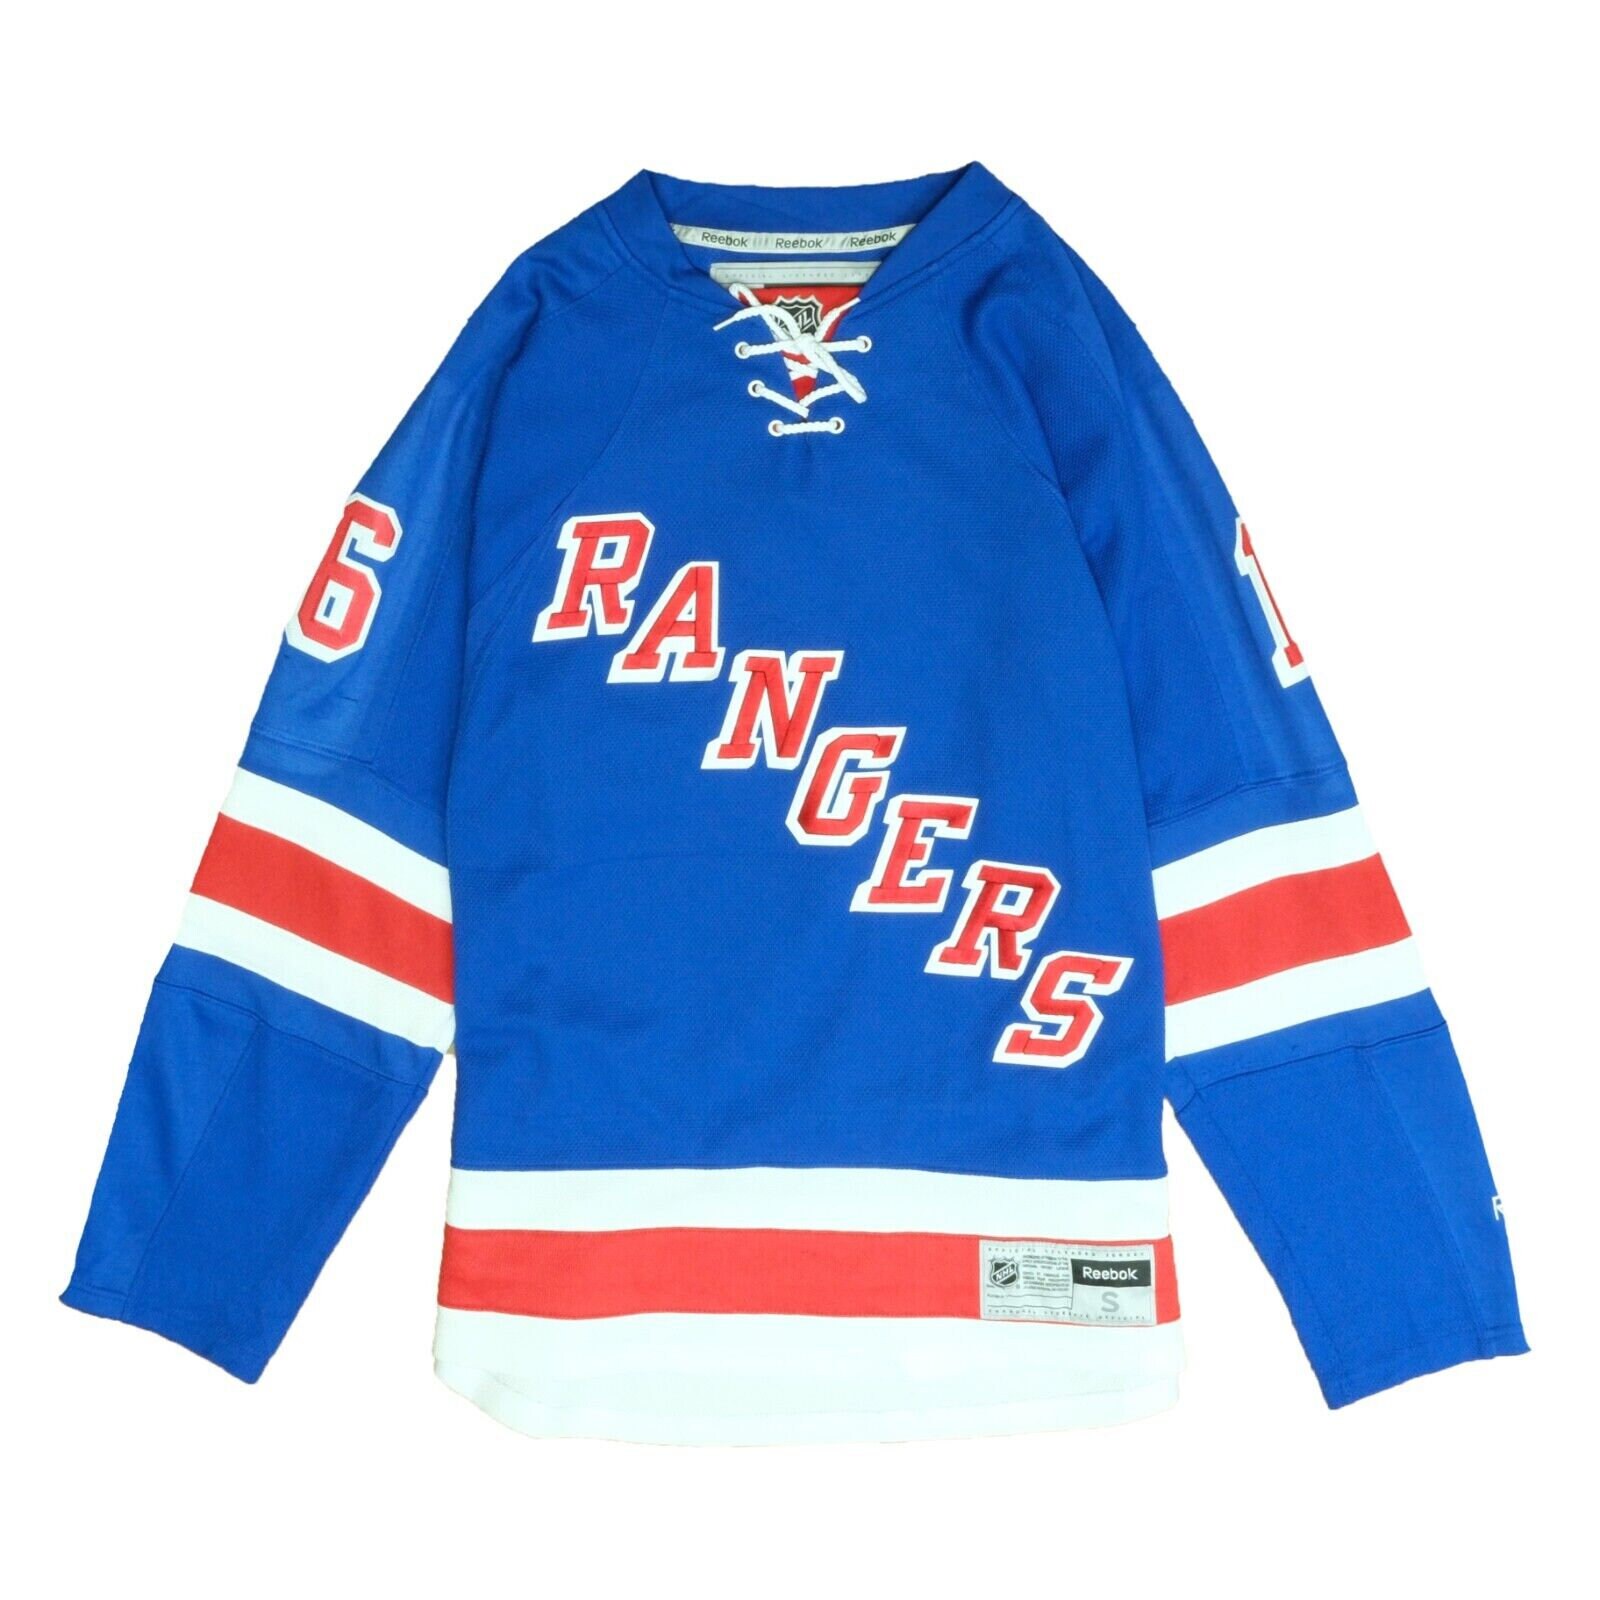 Rangers New York Americans Heritage Jersey Concept : r/rangers